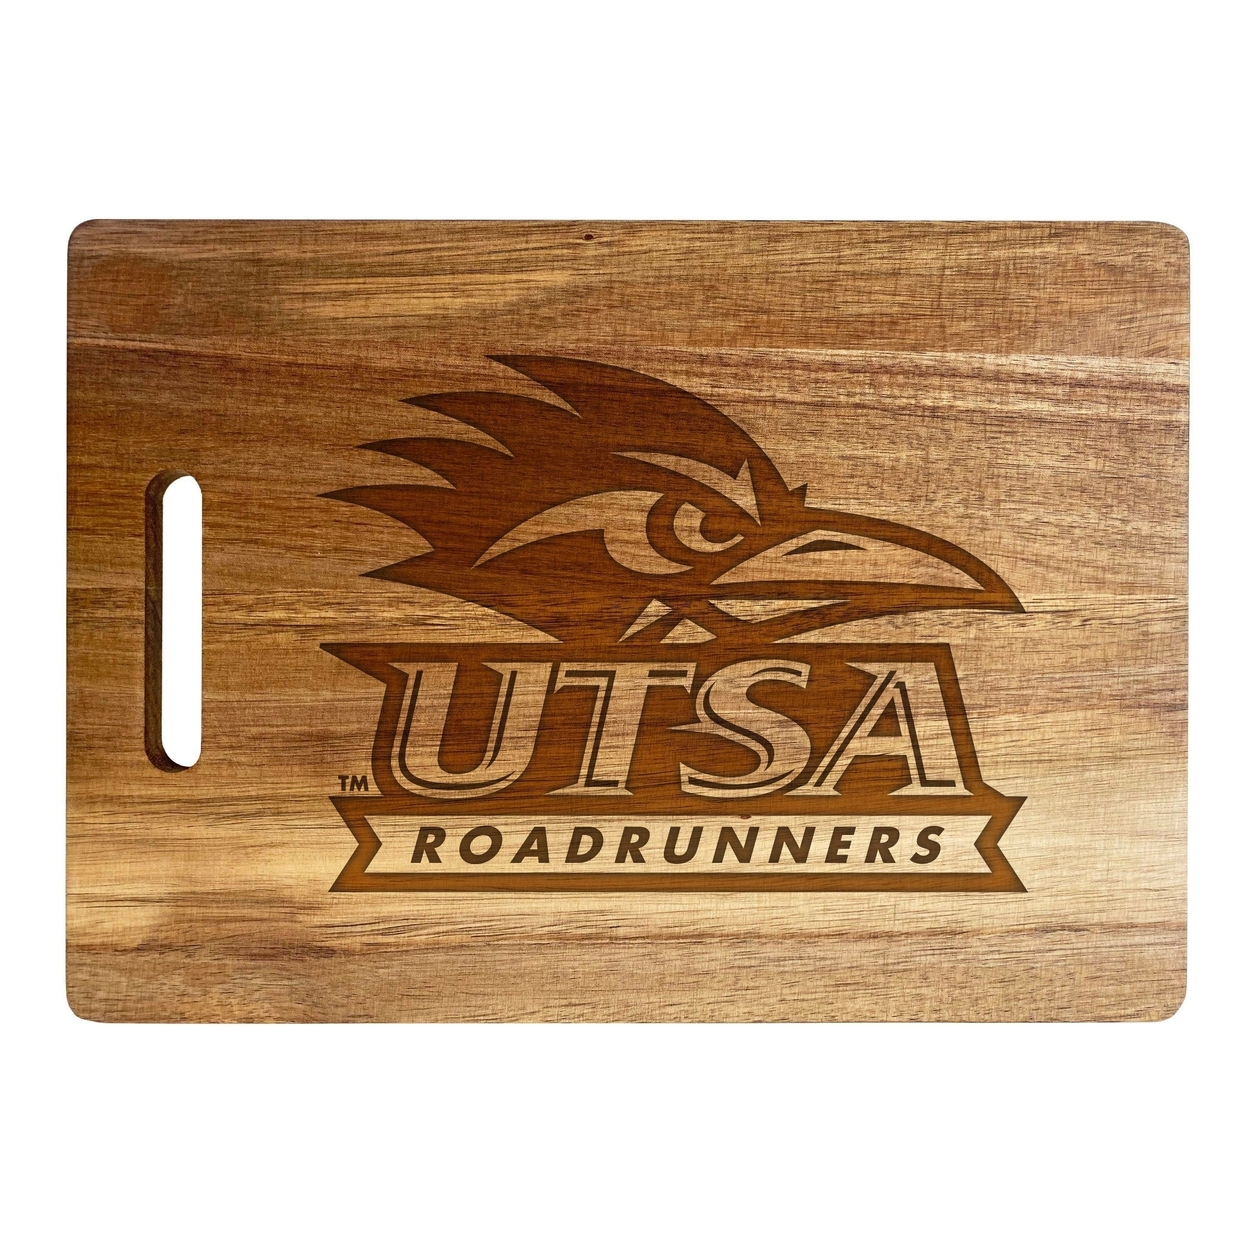 UTSA Road Runners Engraved Wooden Cutting Board 10 X 14 Acacia Wood - Large Engraving